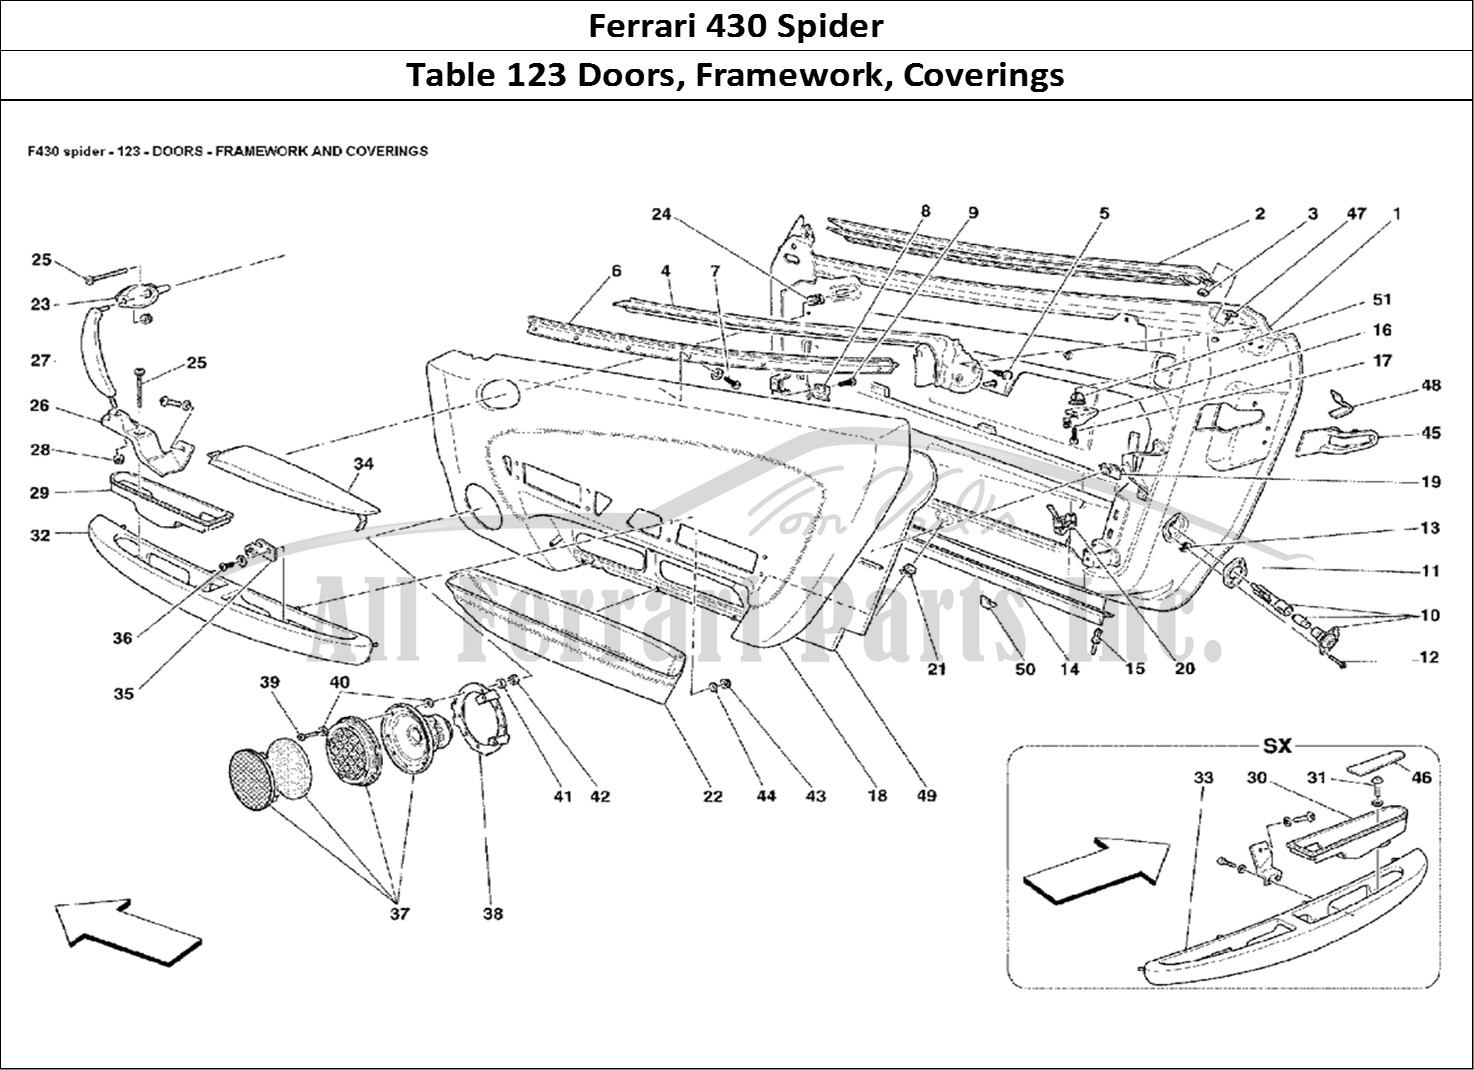 Ferrari Parts Ferrari 430 Spider Page 123 Doors - Framework and Cov